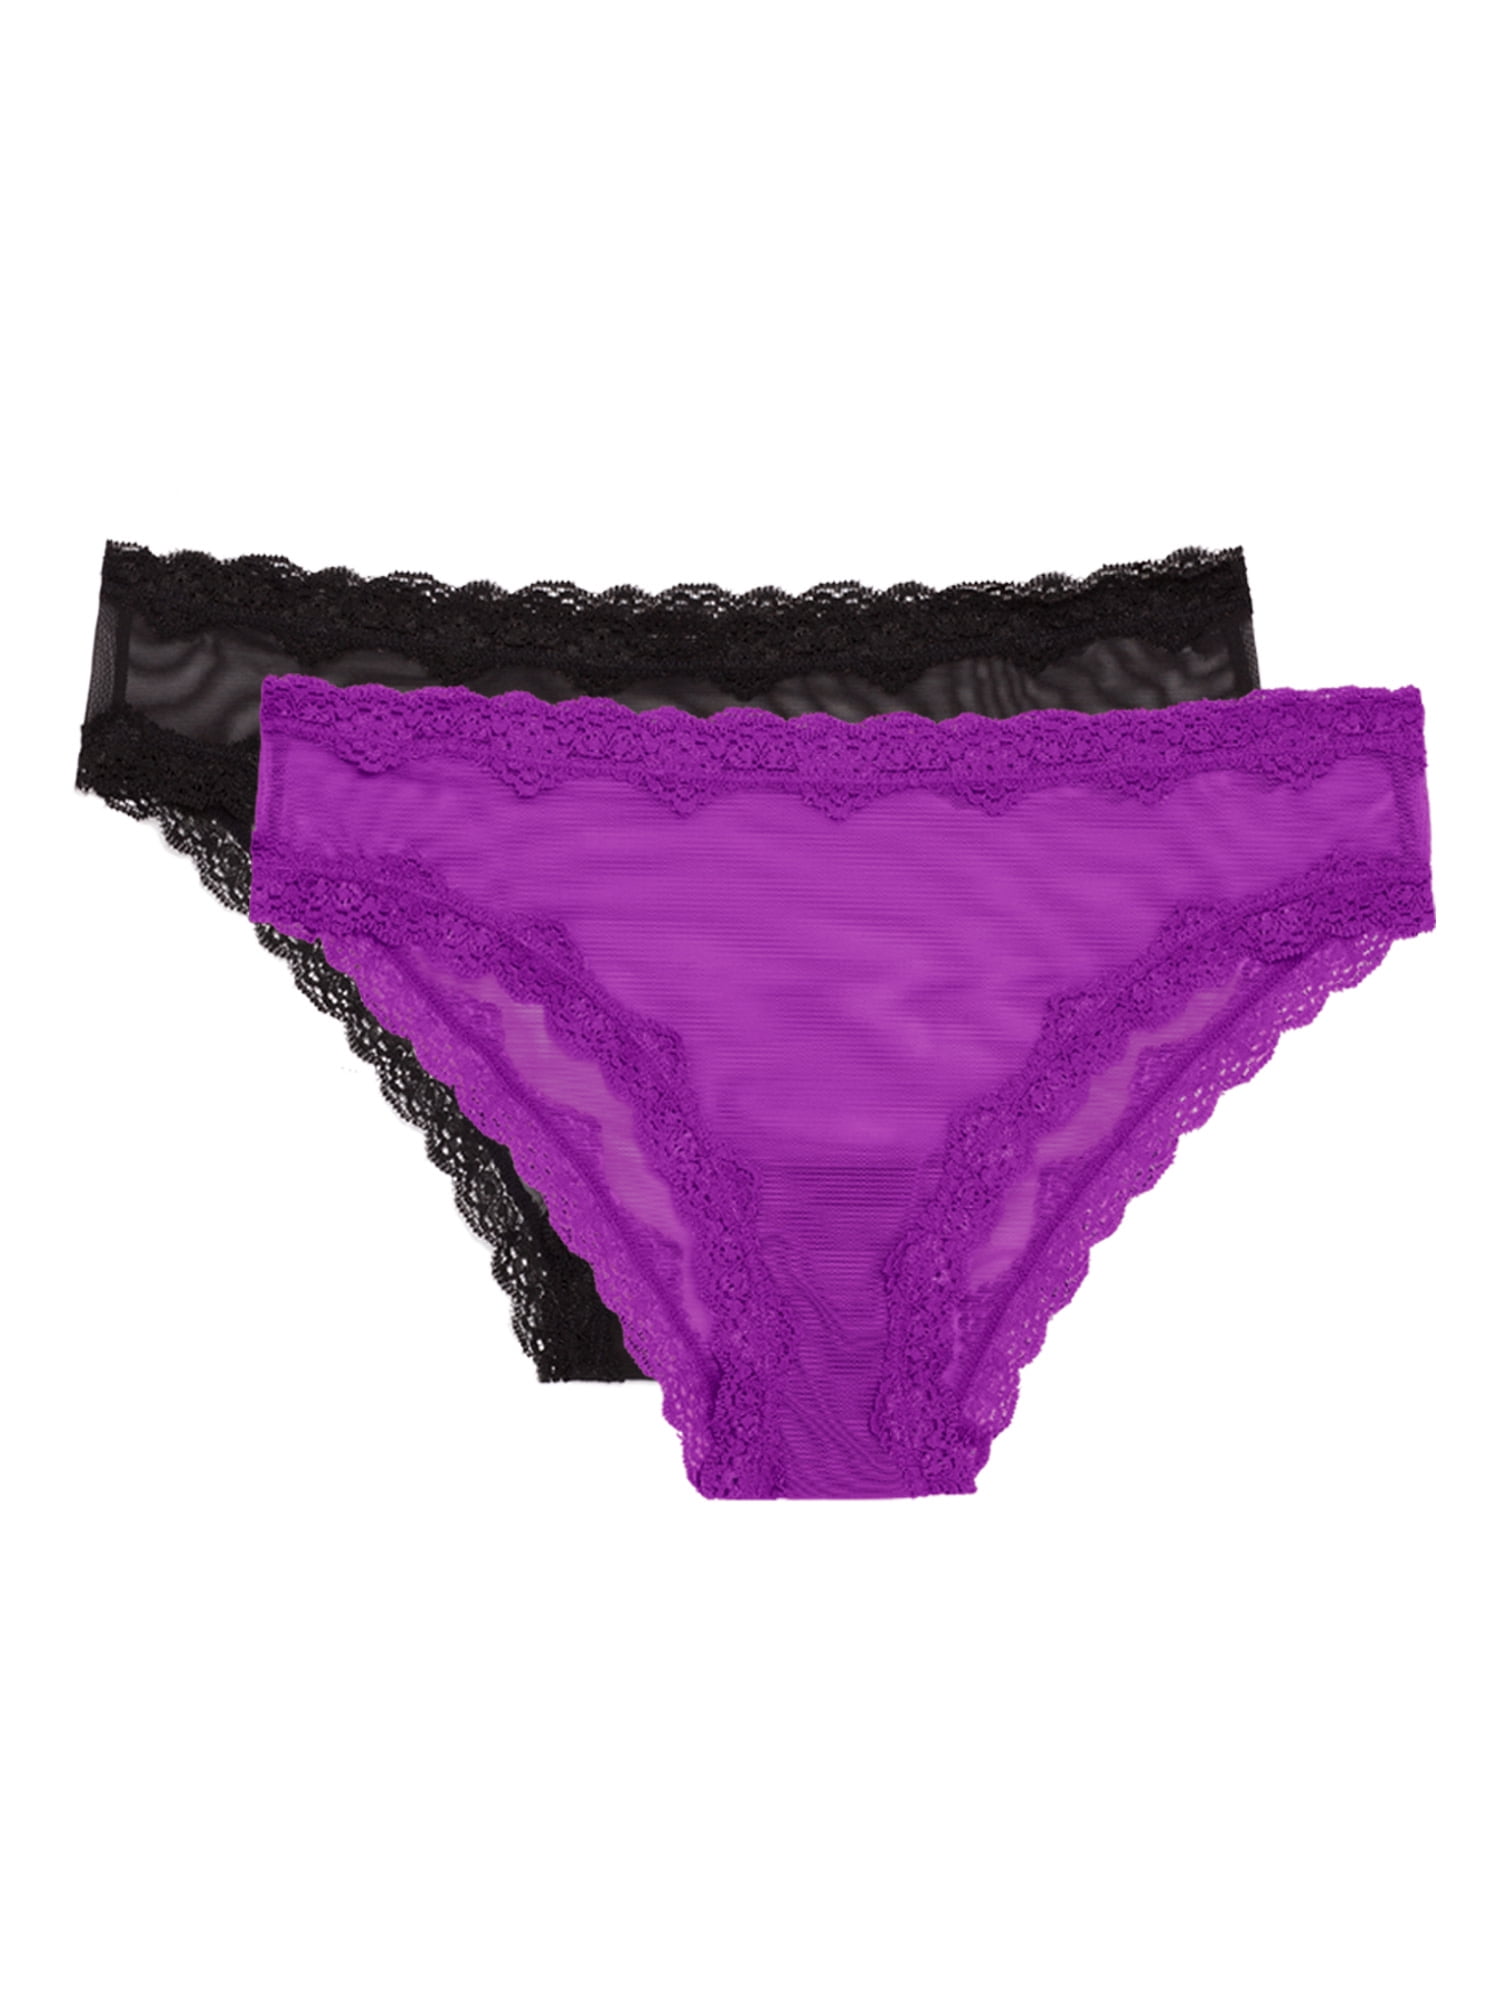 Coquette Womens Large Bra Magenta Purple Lace - Black Trim